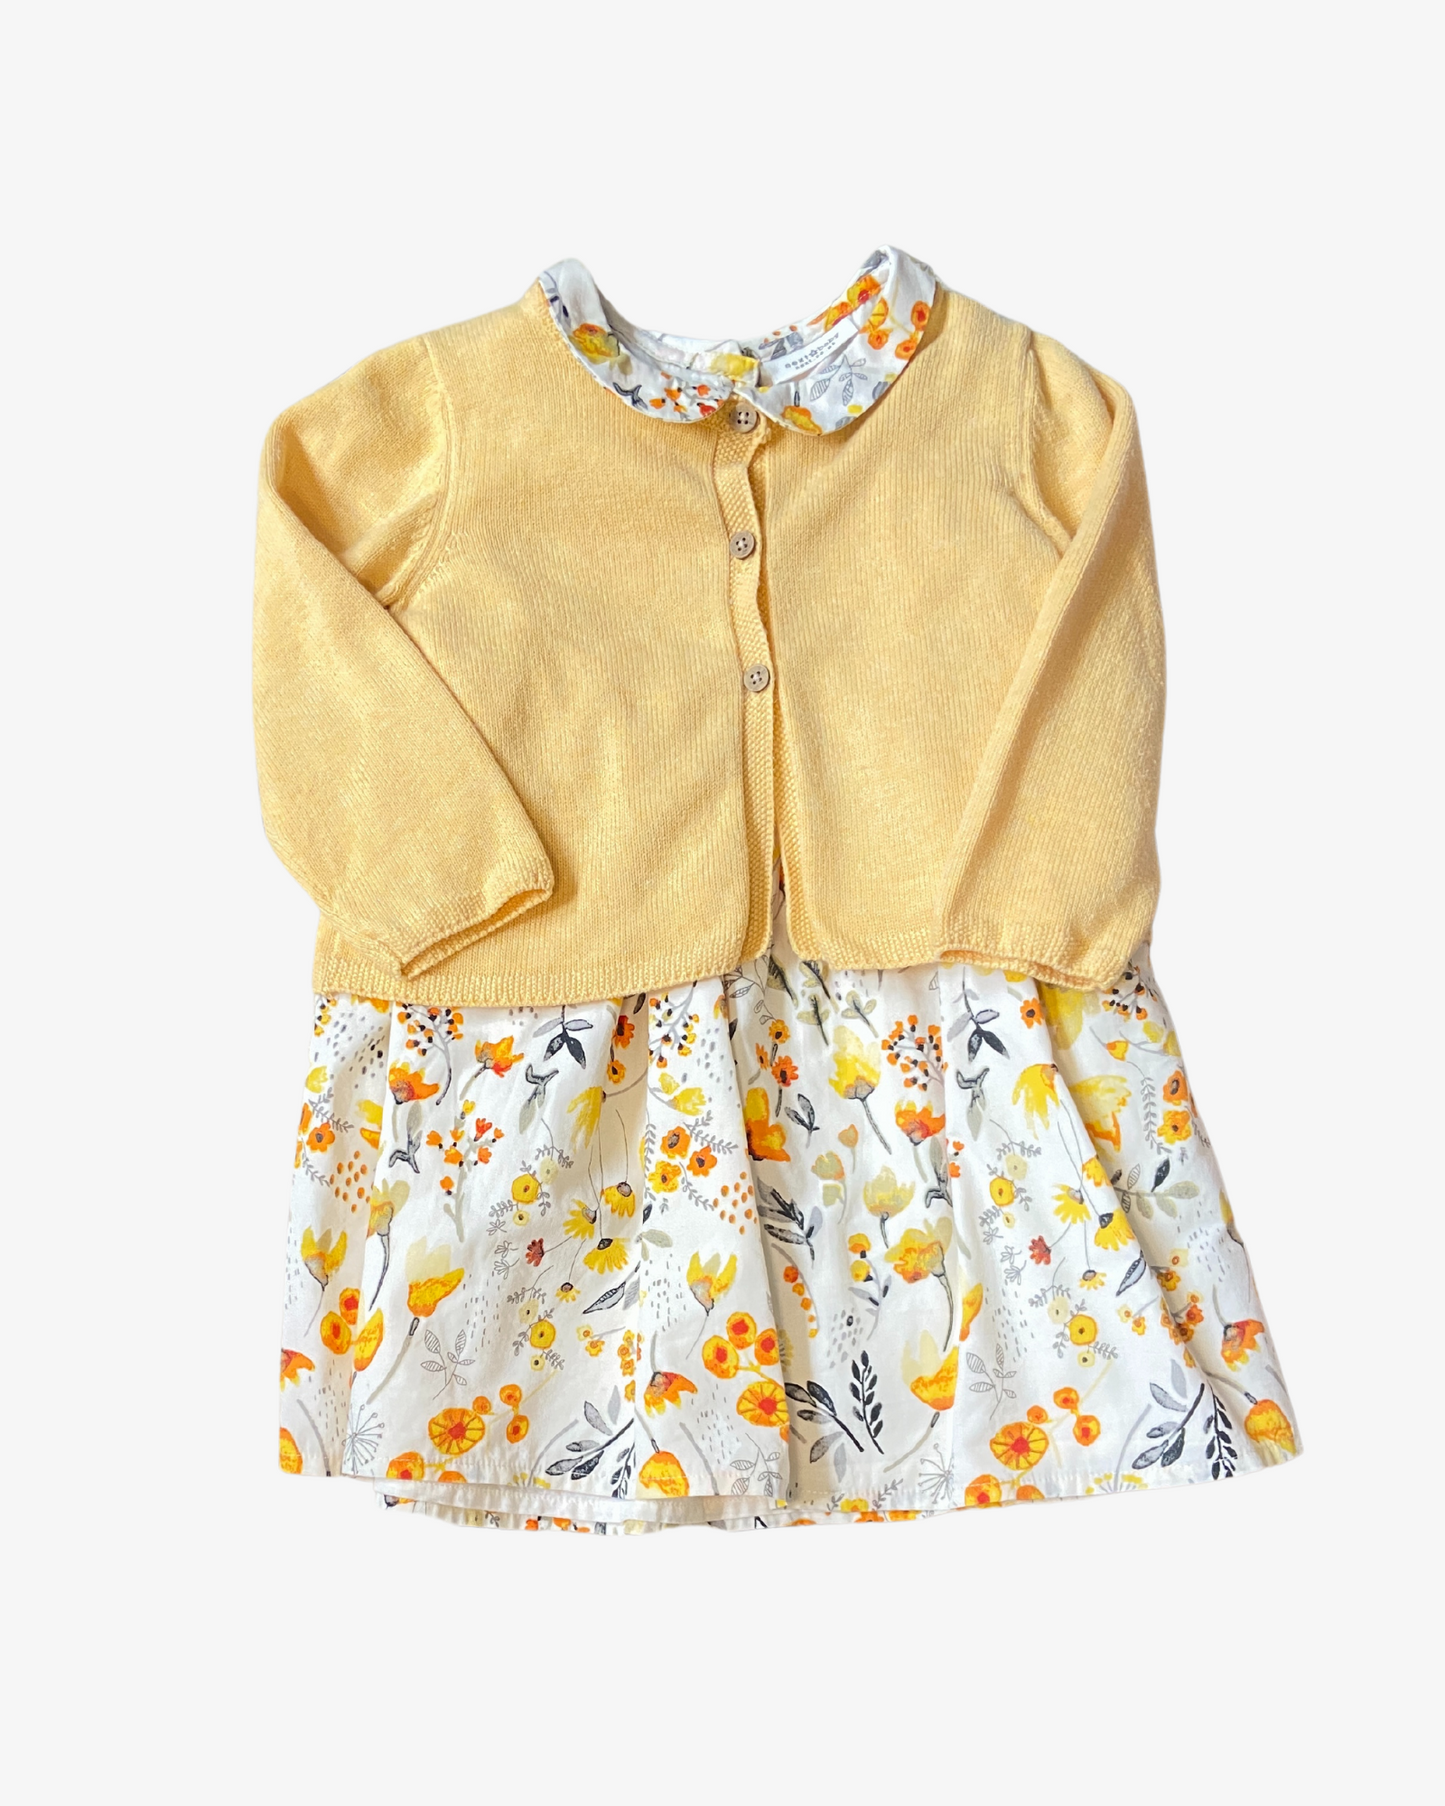 12-18 M Yellow floral dress & cardigan